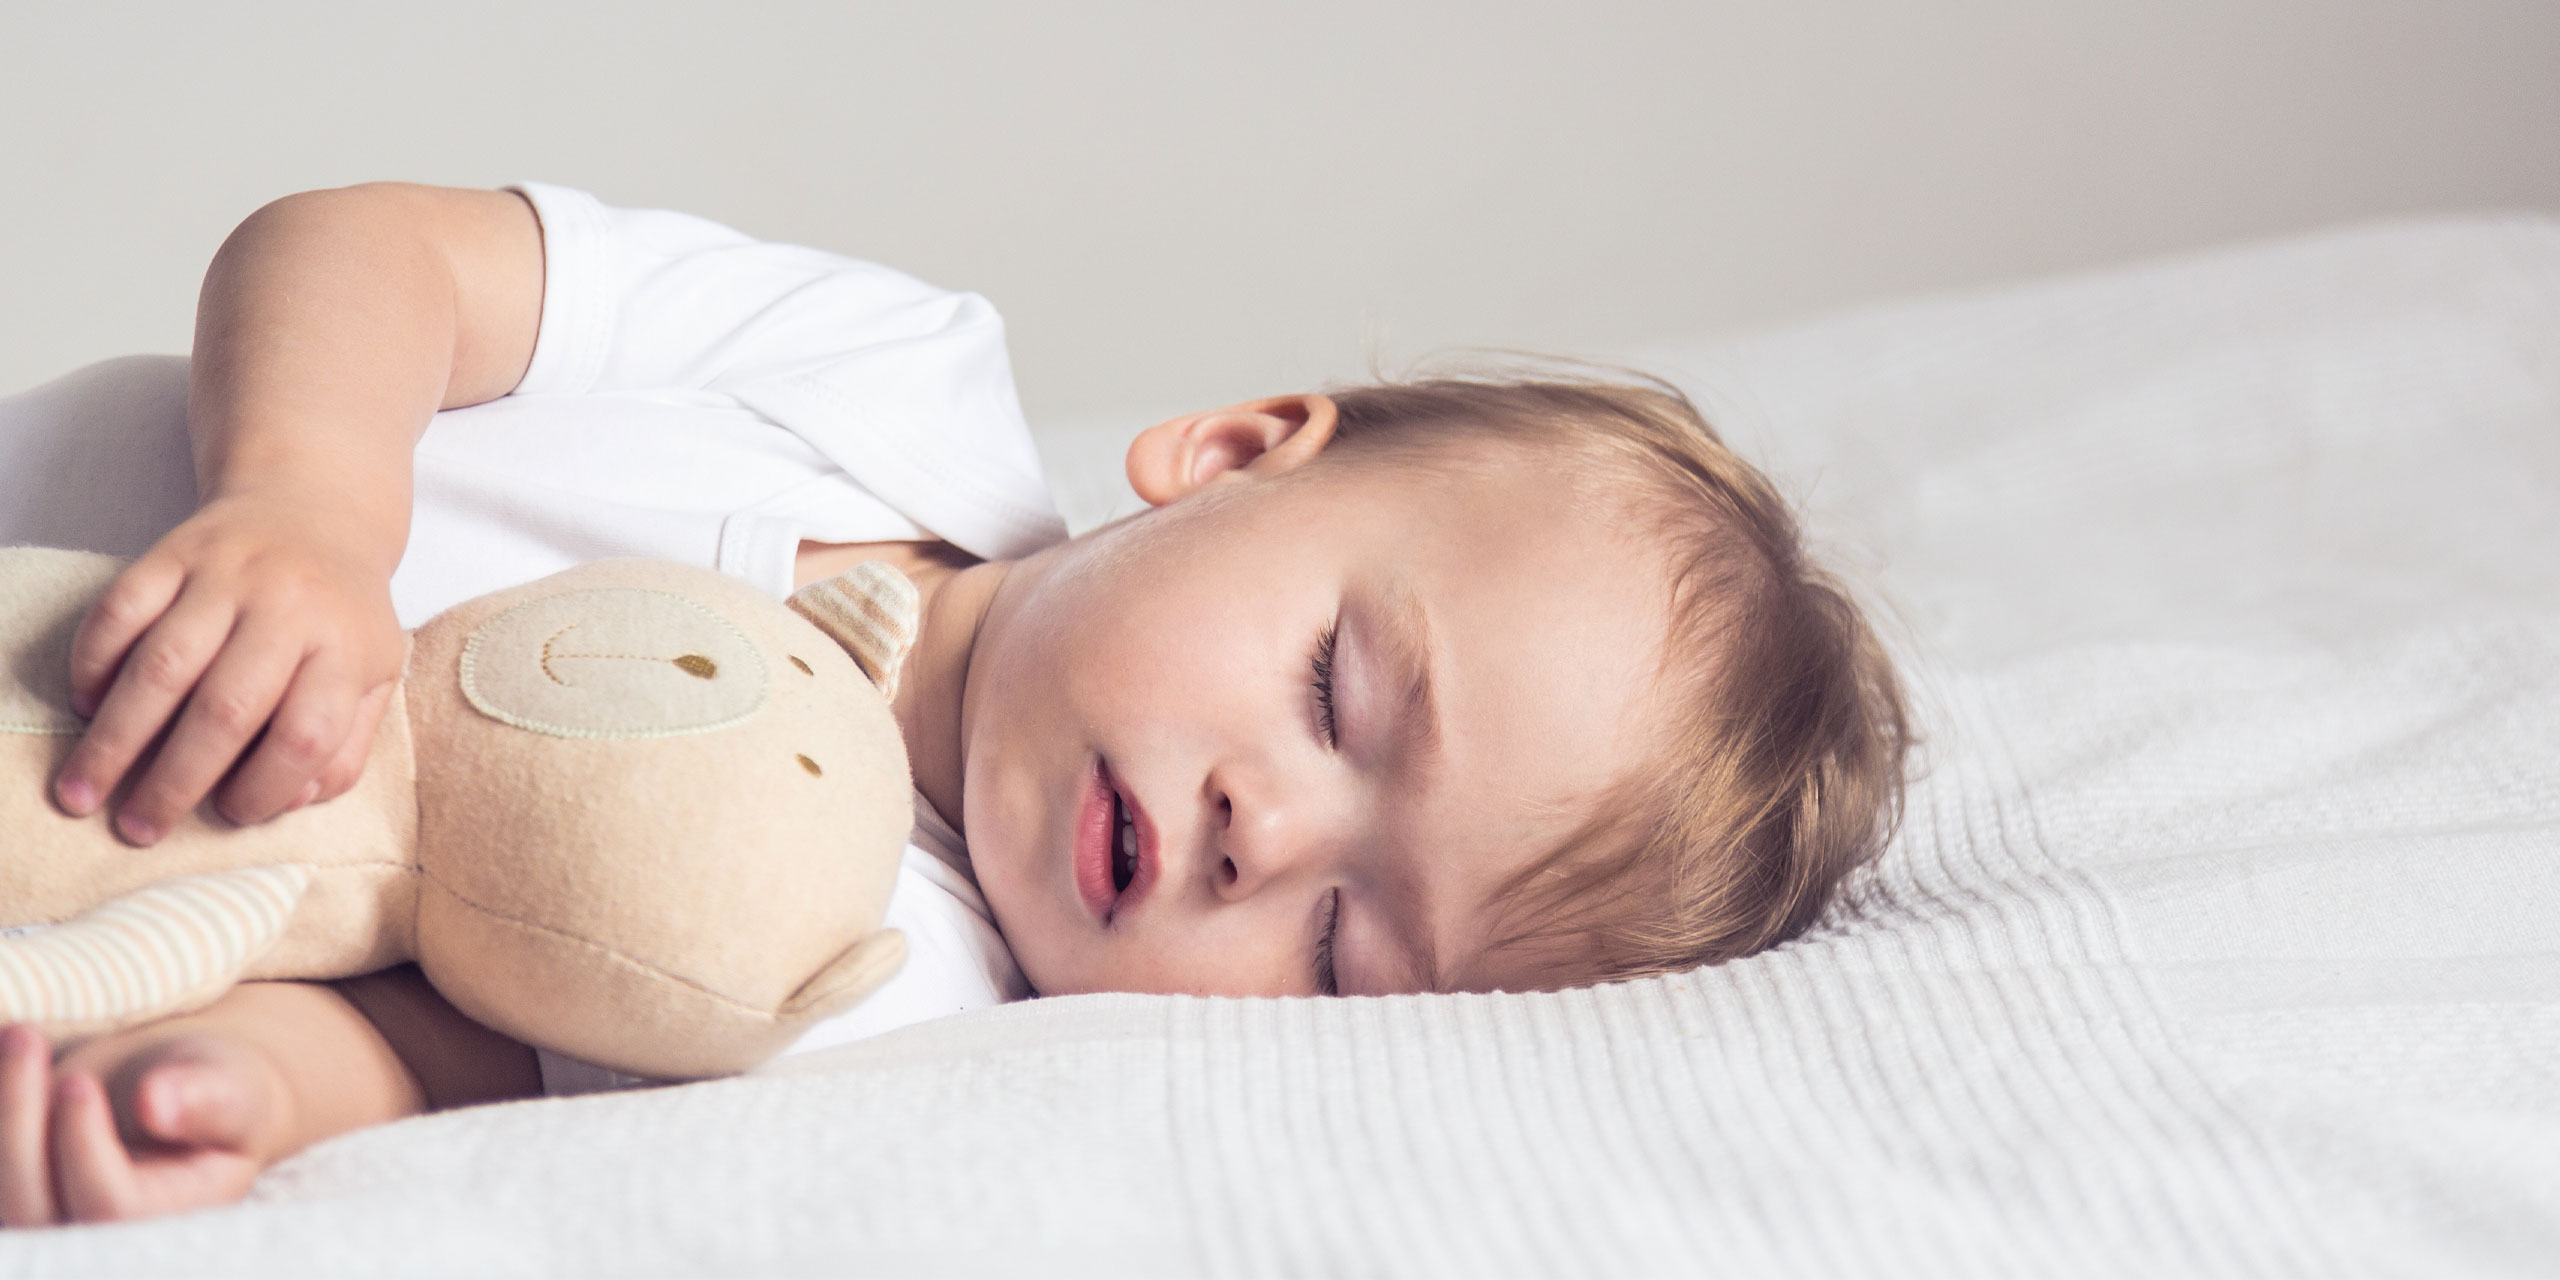 Sleeping Baby; Courtesy of Mallmo/Shutterstock.com